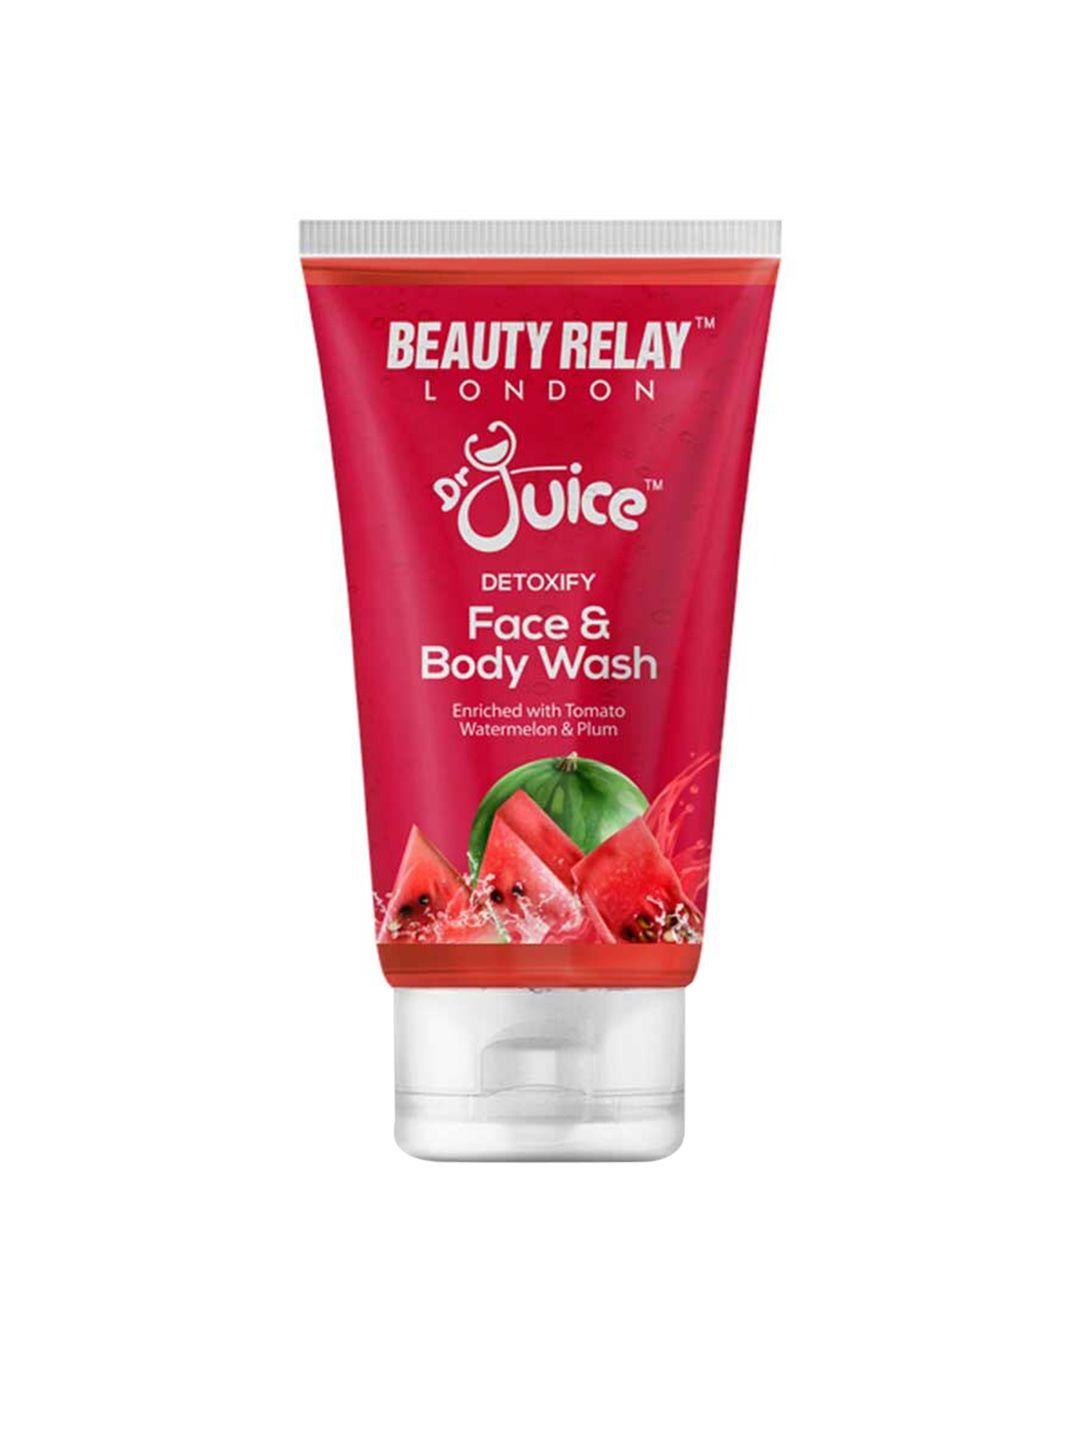 beautyrelay london dr juice tomato, watermelon & plum detoxify face & body wash 200ml